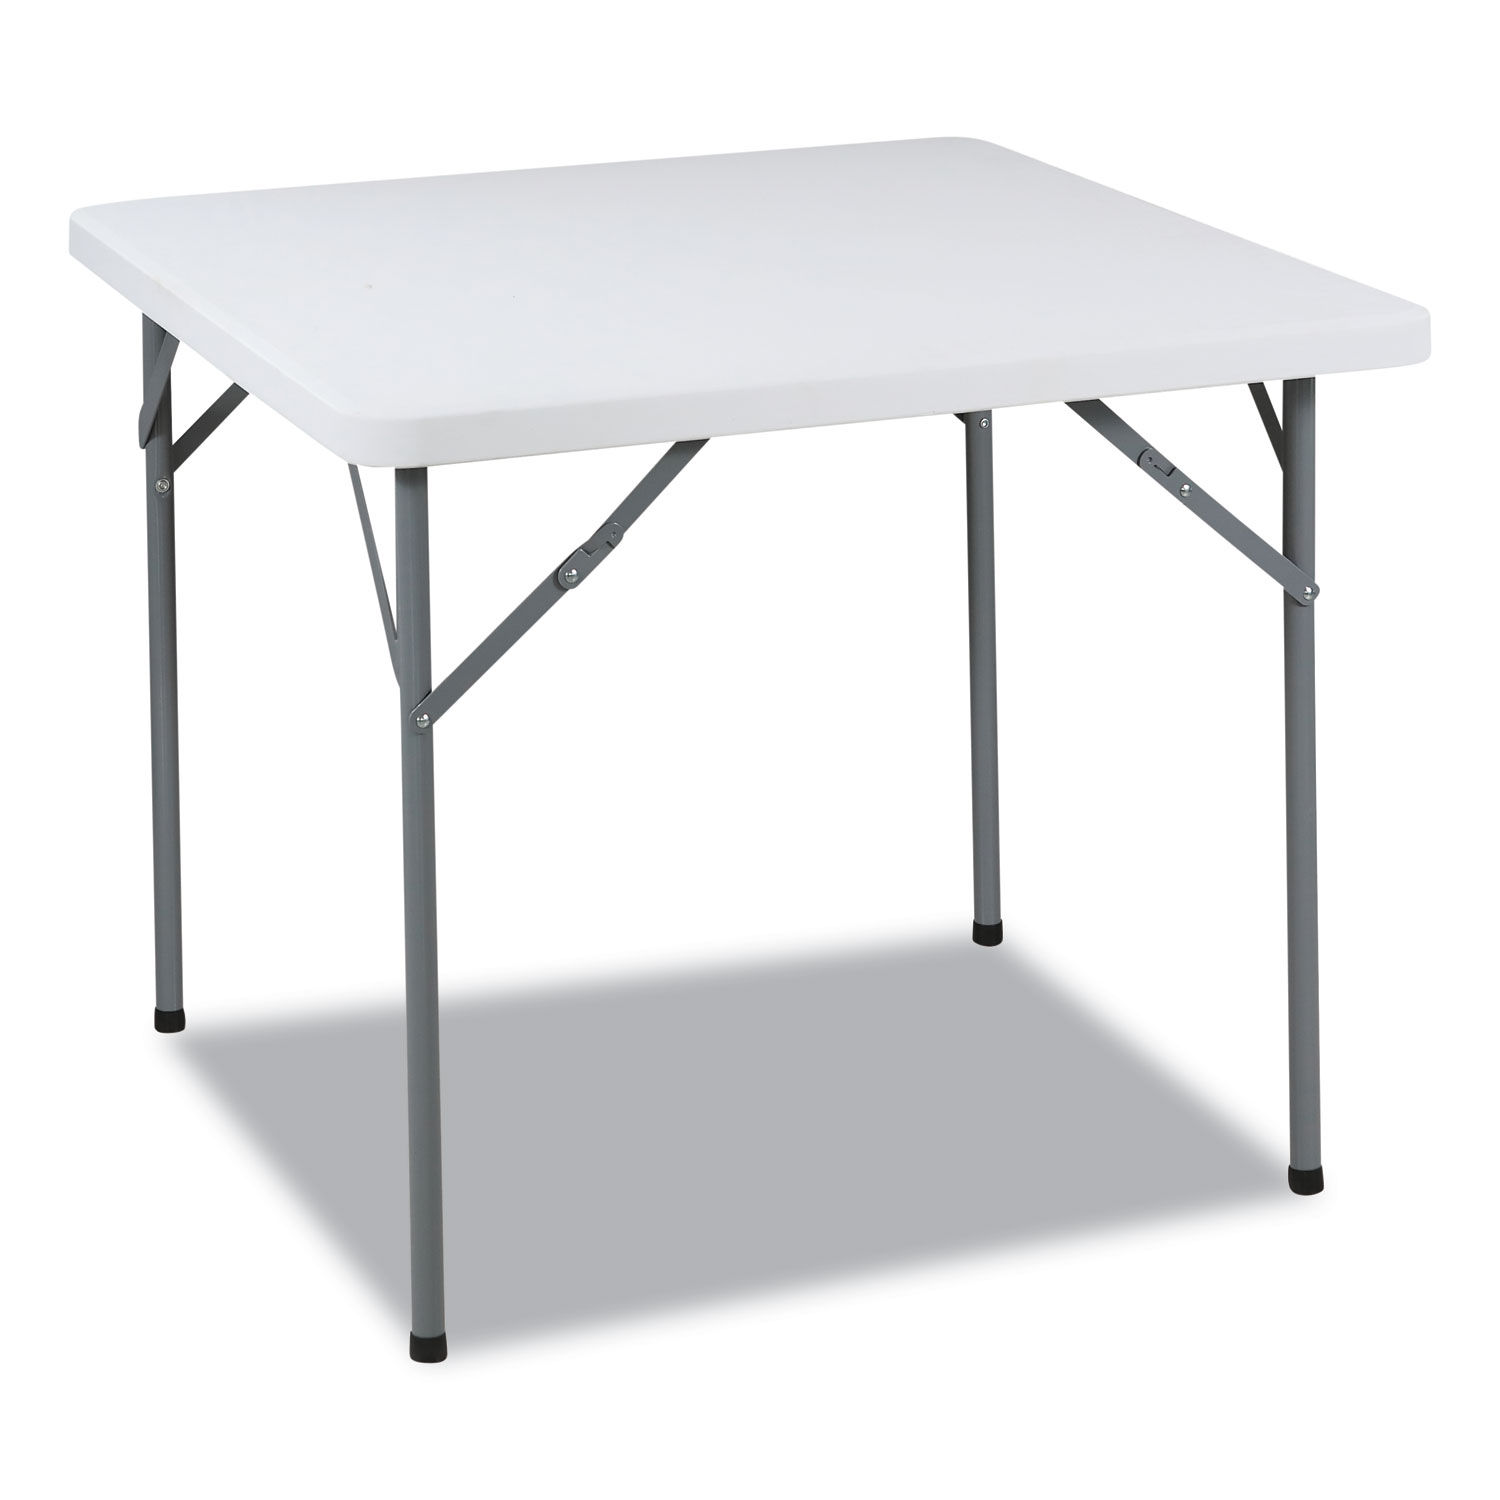 IndestrucTable Classic Folding Table Square Top, 200 lb Capacity, 34w x 34d x 29h, Platinum Granite